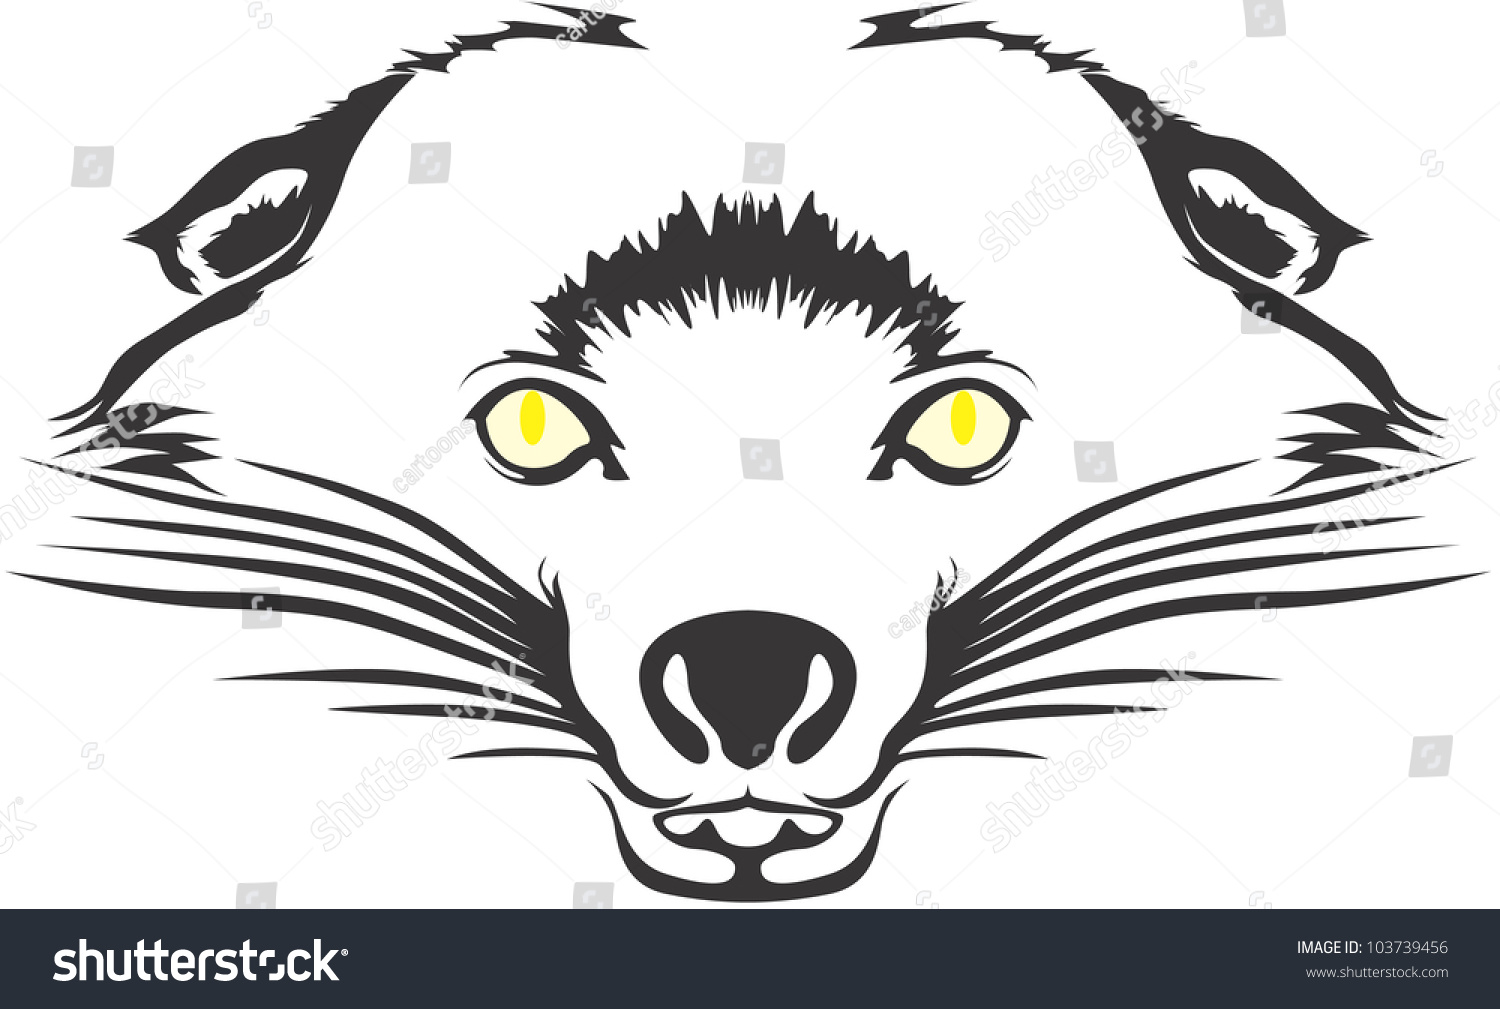 SVG of Creative Bear Cat Illustration svg